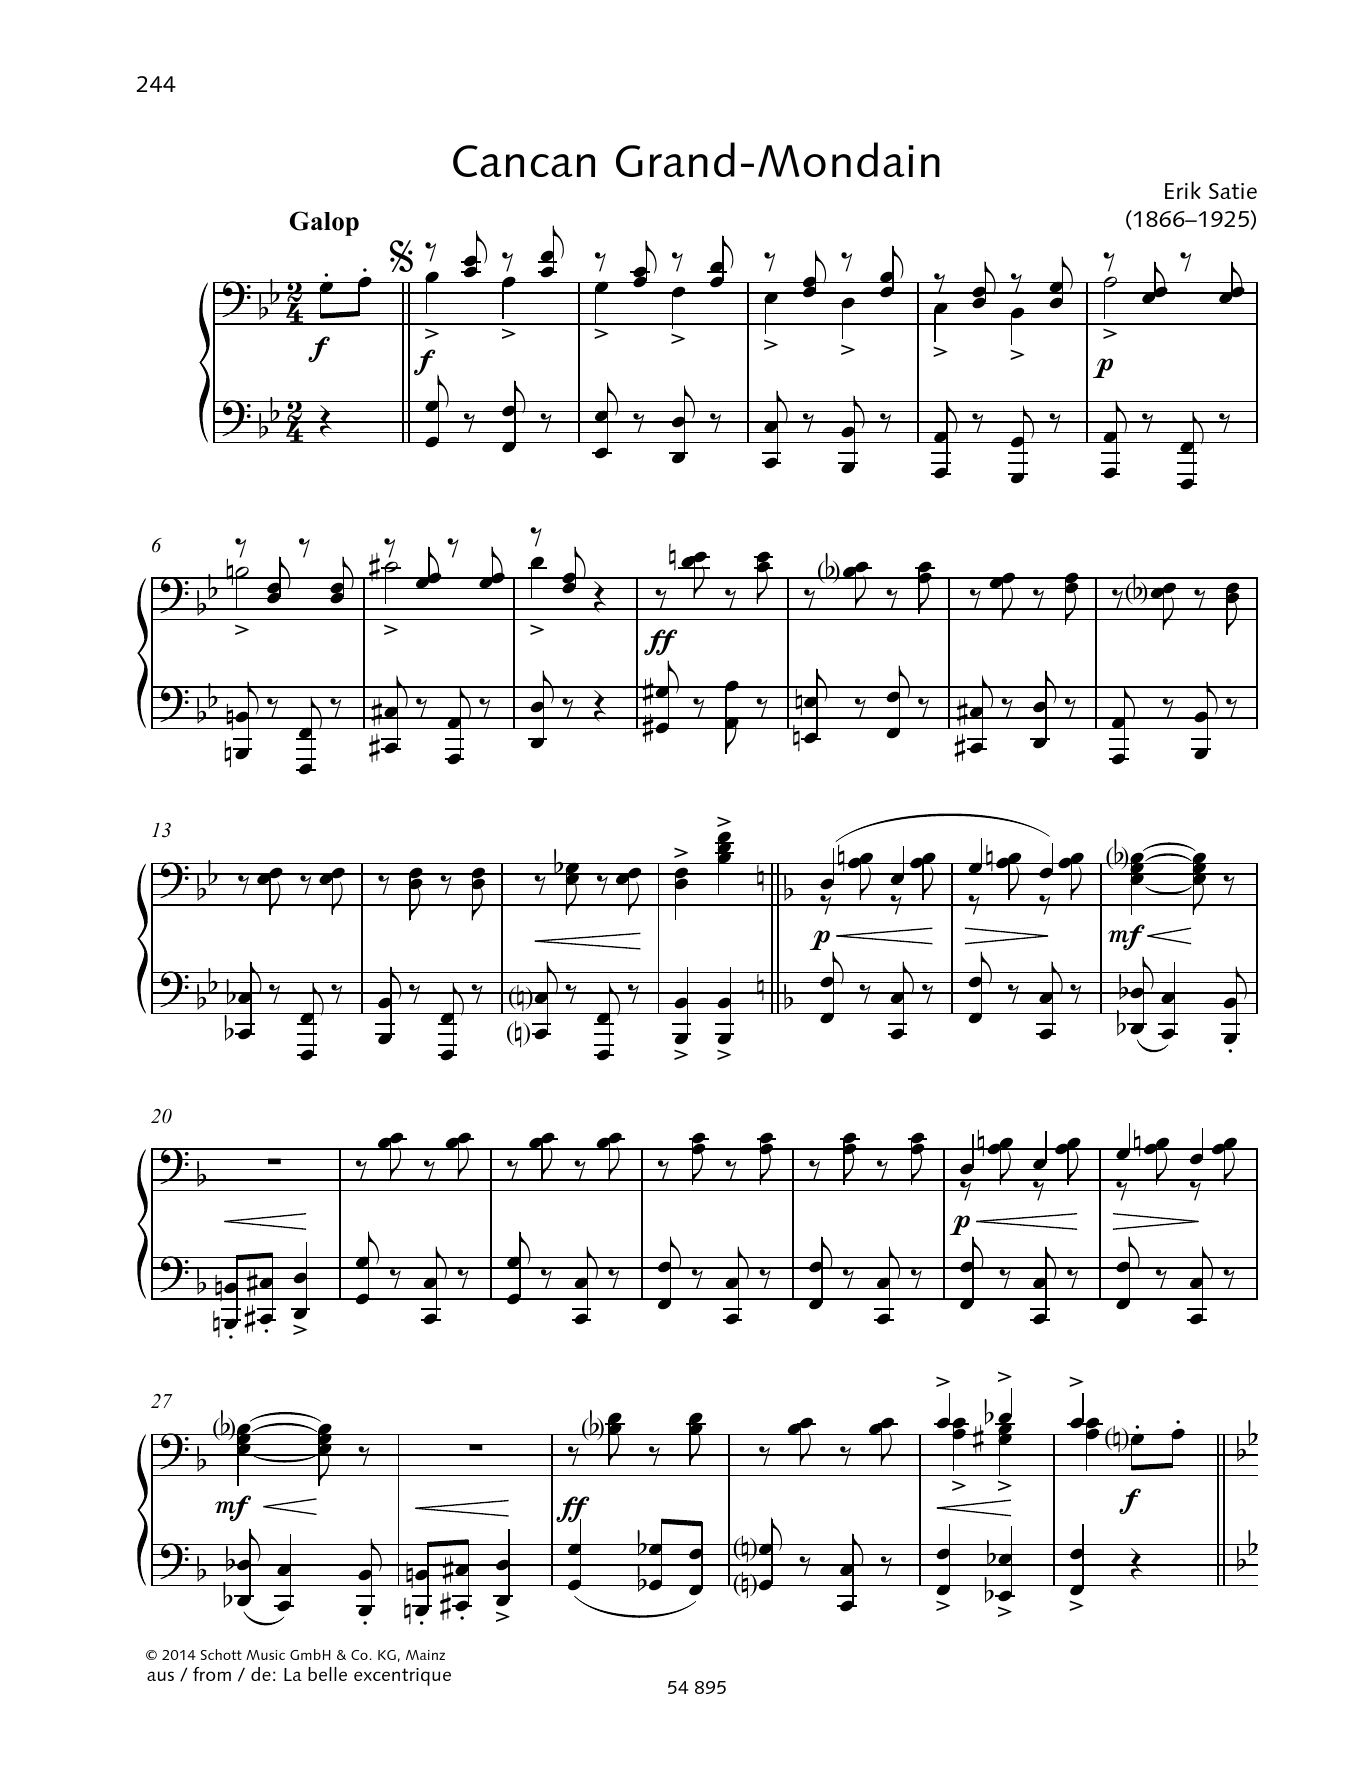 Erik Satie Cancan Grand-Mondain Sheet Music Notes & Chords for Piano Duet - Download or Print PDF